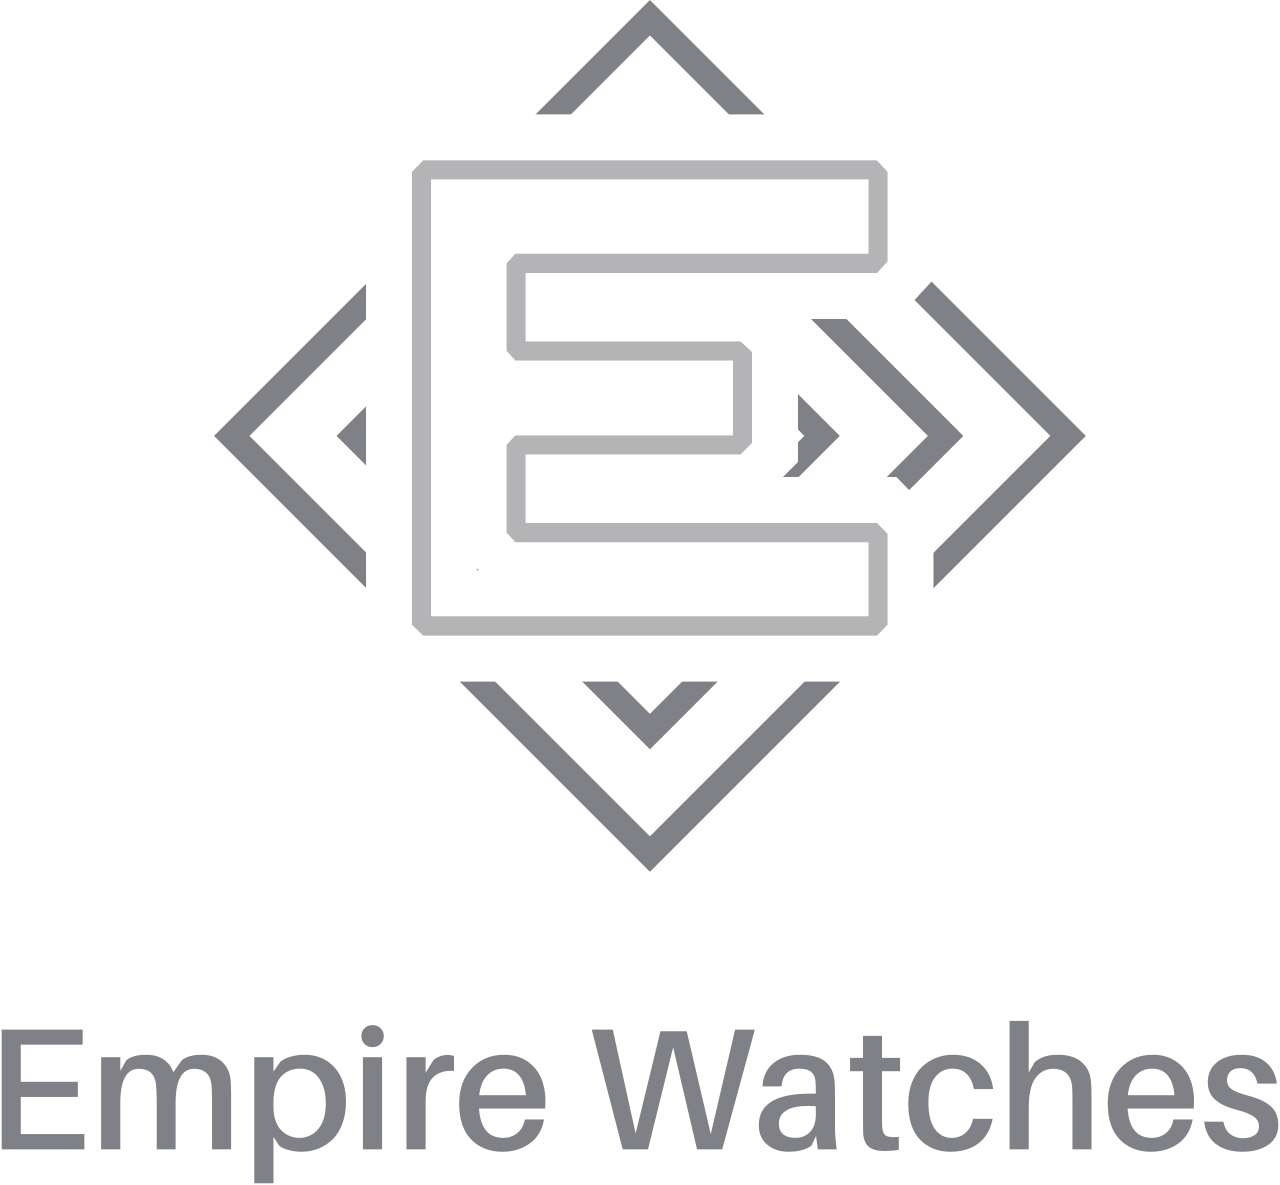 Empire Watches 's logo